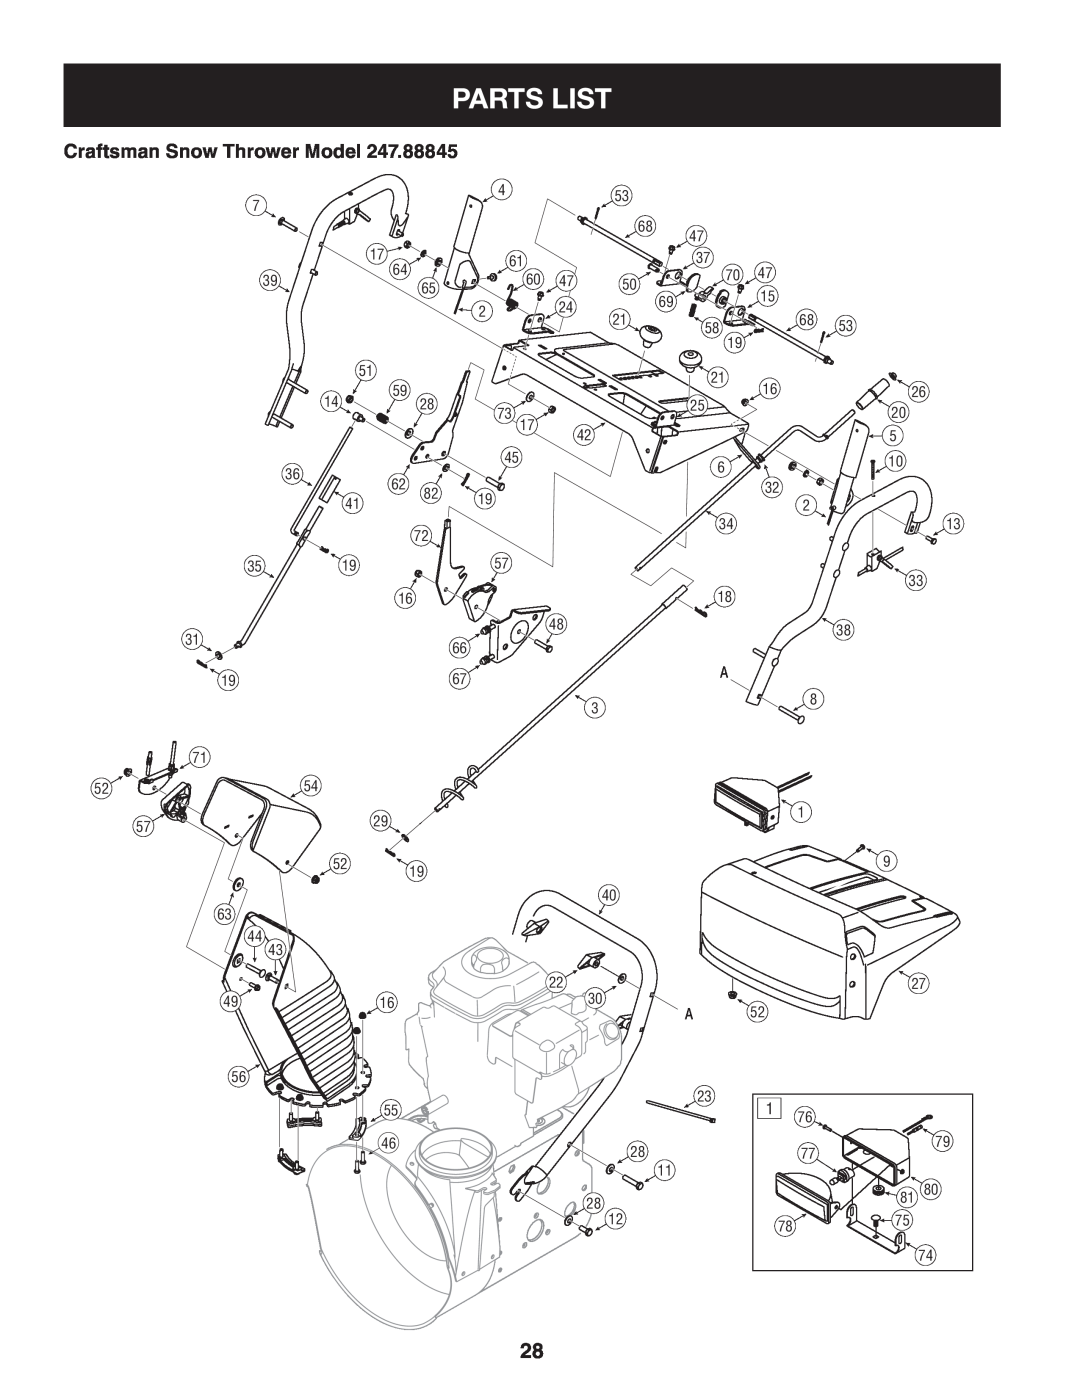 Craftsman 247.88845 manual Parts List, Craftsman Snow Thrower Model 